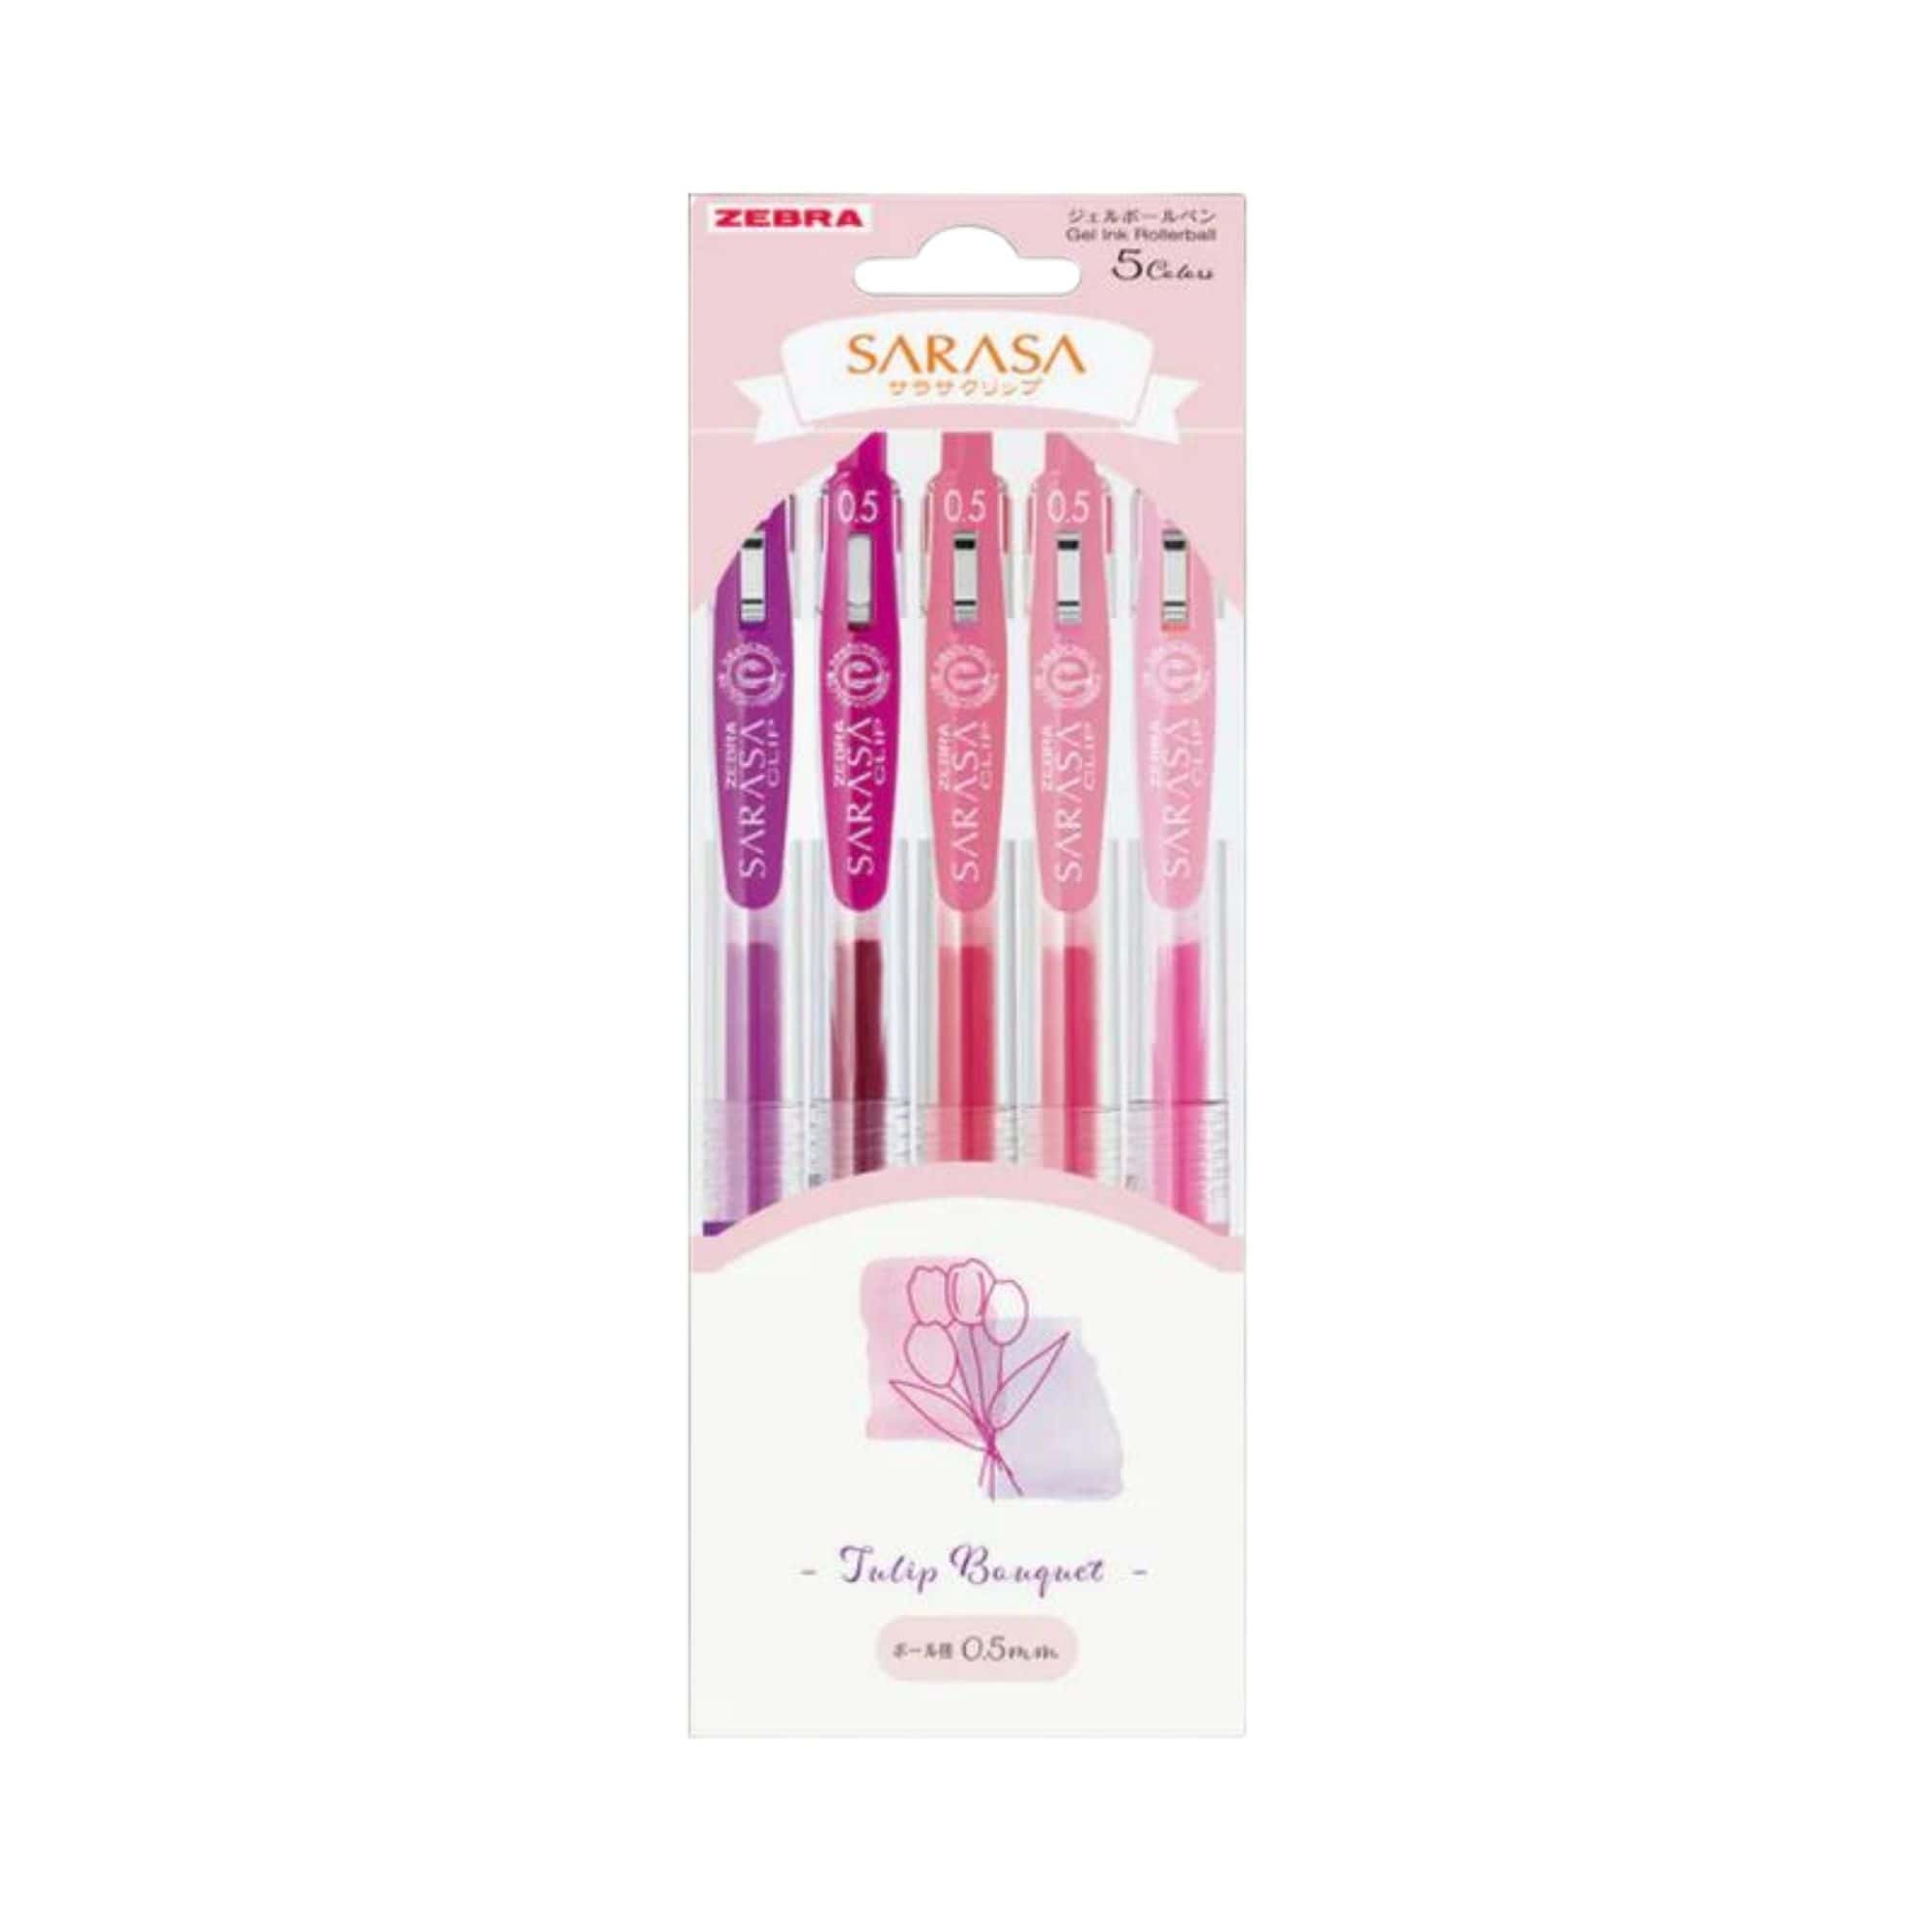 Limited Edition of ZEBRA Sarasa Push Clip 0.5mm Gel Pens - Tulip Bouquet Set - Paper Kooka Australia